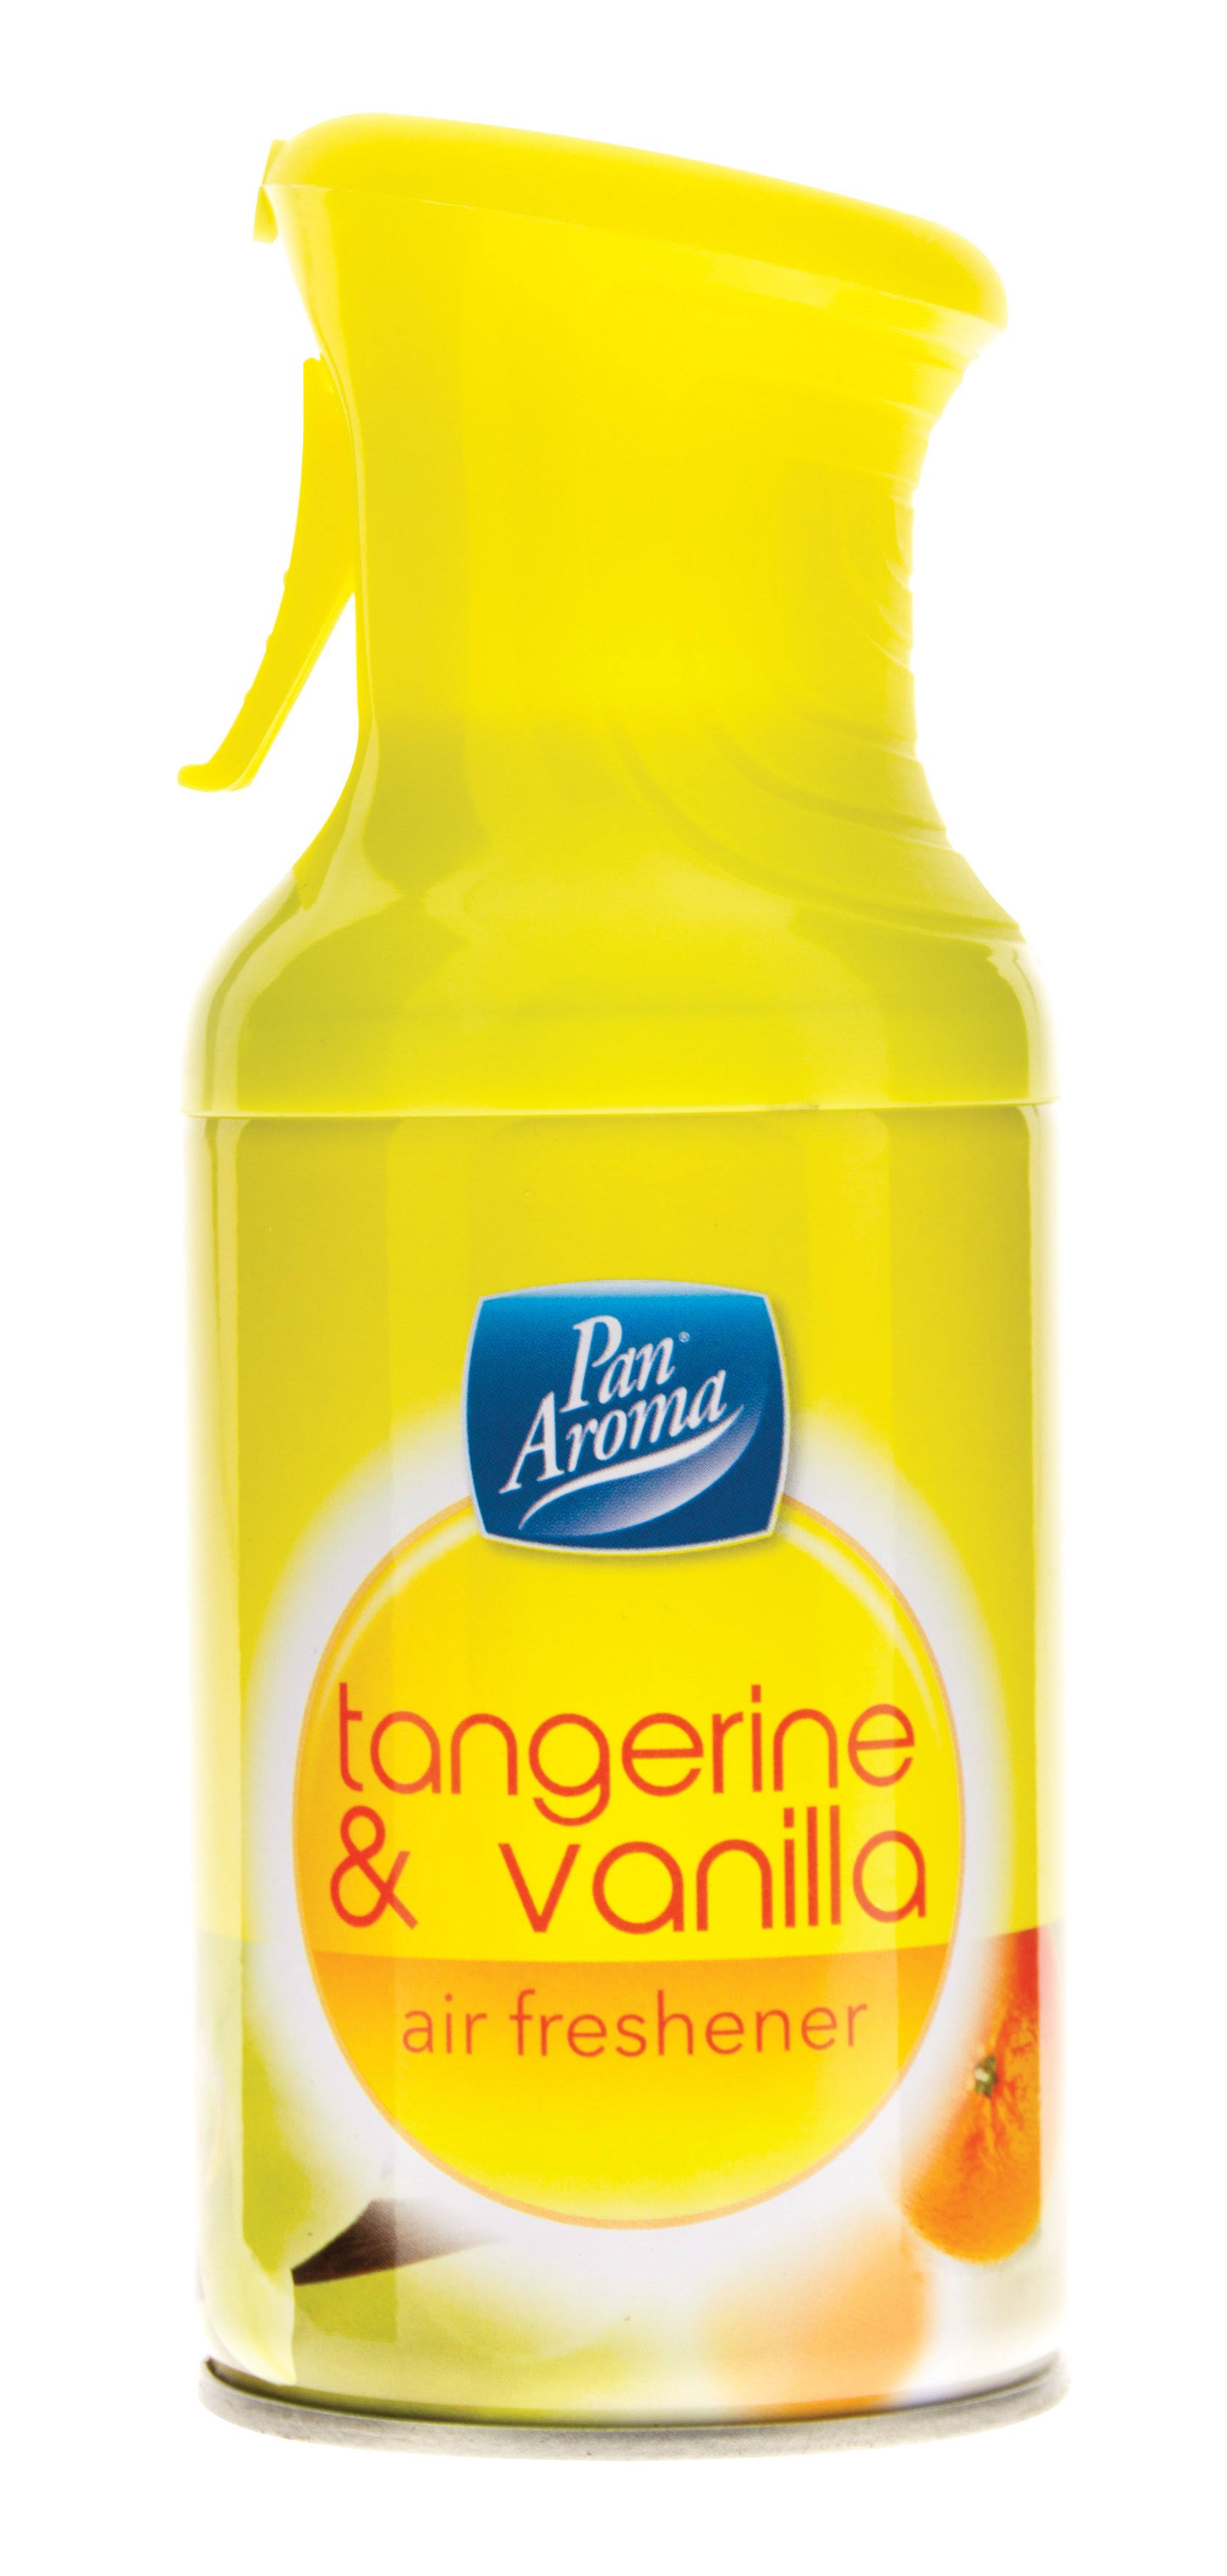 Pan Aroma Air Freshener - Tangerine & Vanilla Fragrance, 250ml